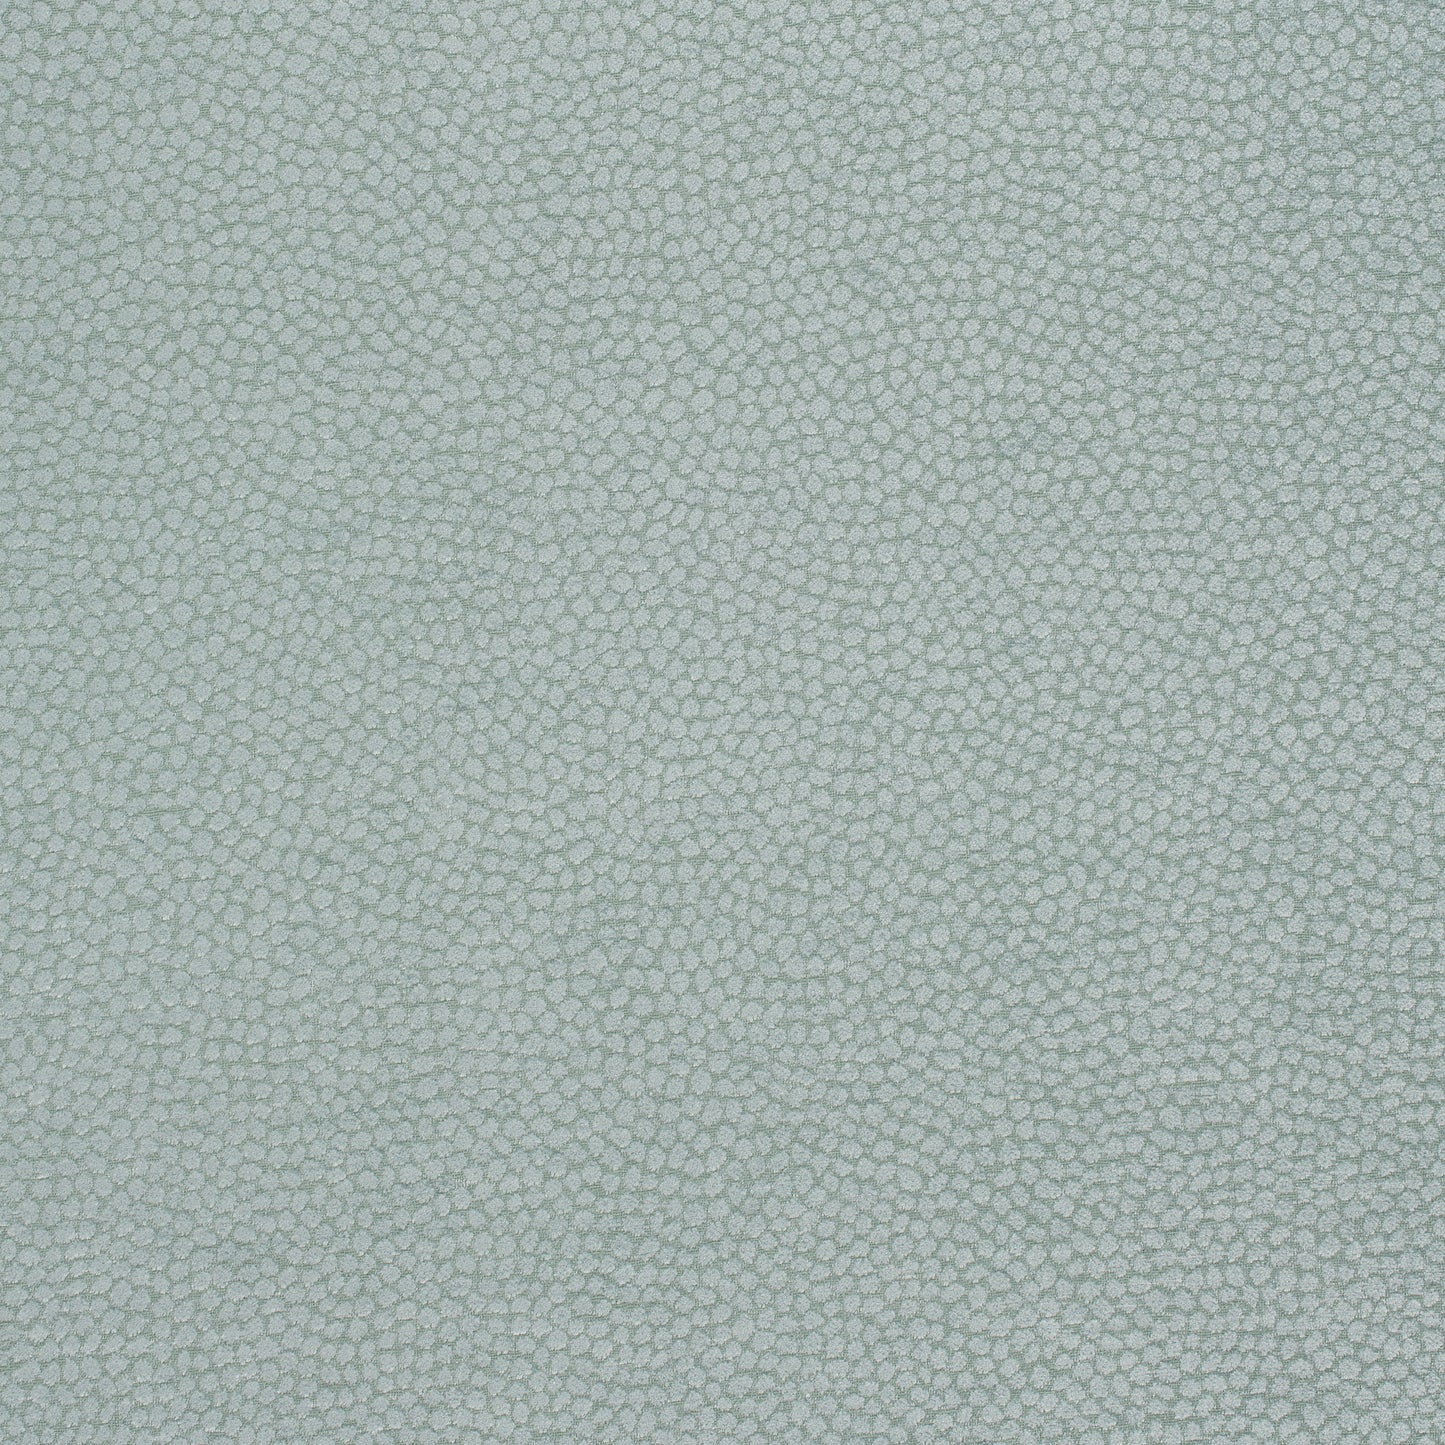 Purchase Thibaut Fabric Item W80517 pattern name Kali color Aqua